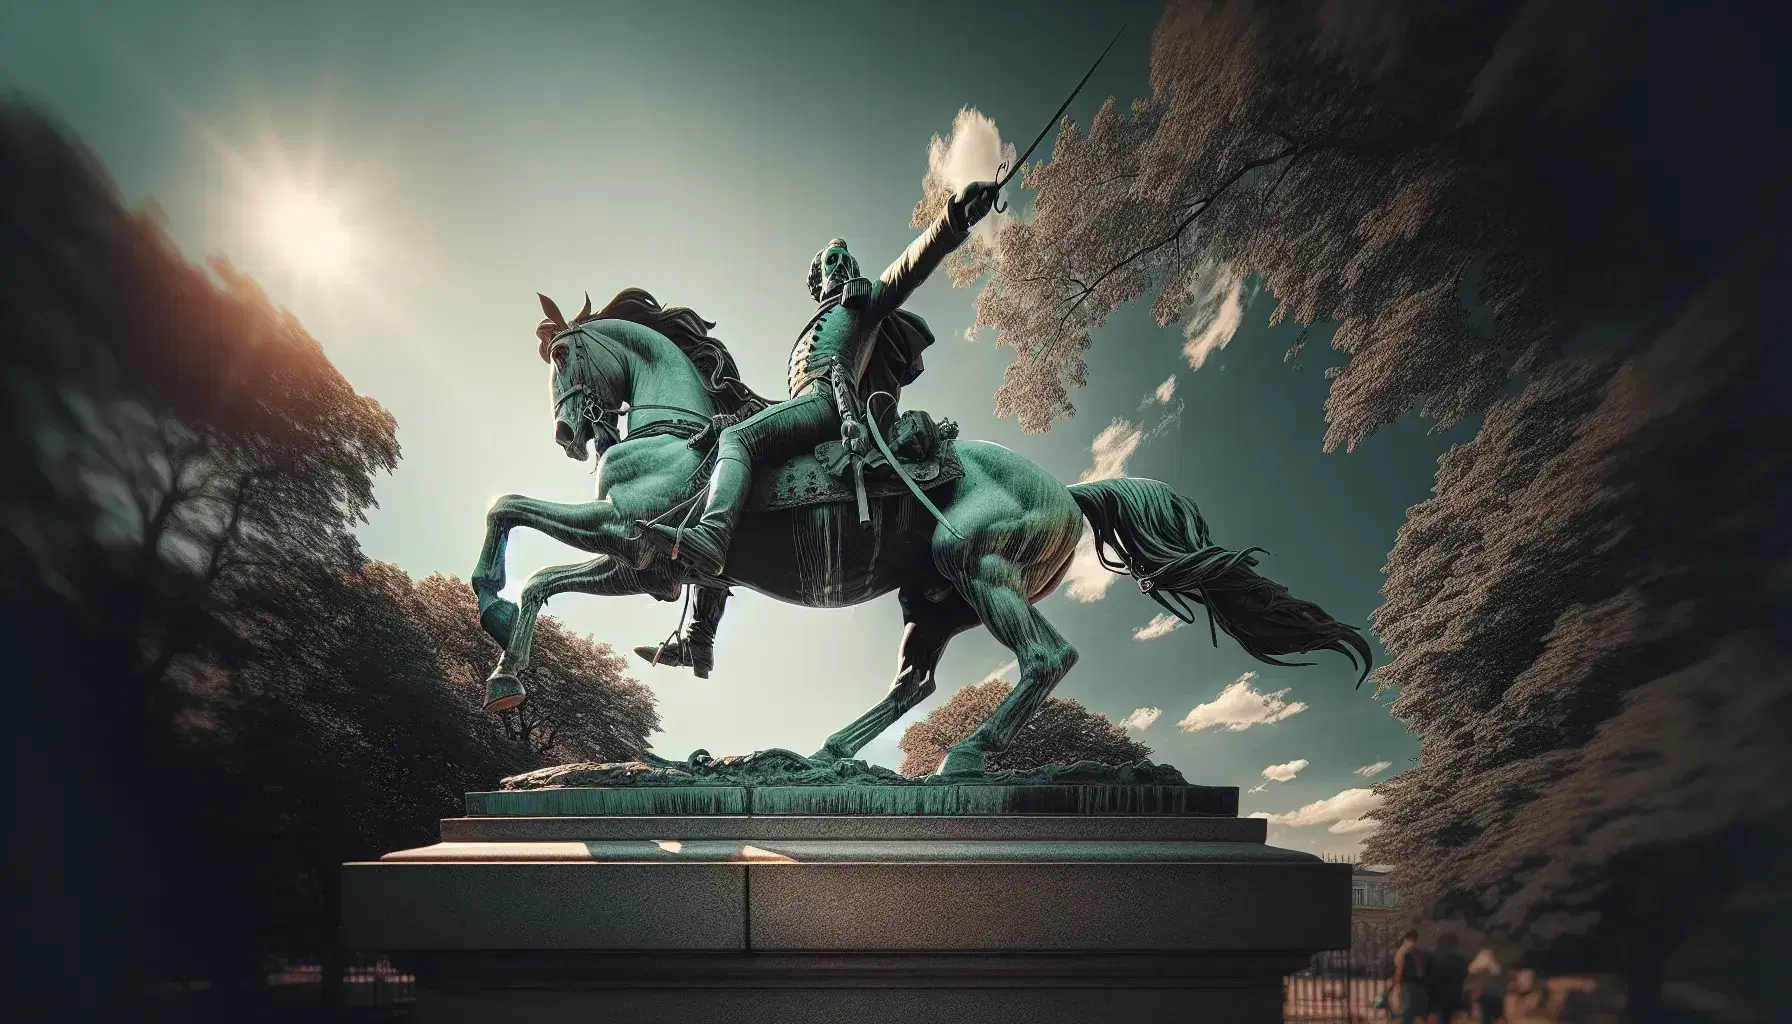 Estatua ecuestre de bronce de un militar del siglo XIX montando a caballo erguido, con espada en alto, bajo un cielo azul con árboles al fondo.